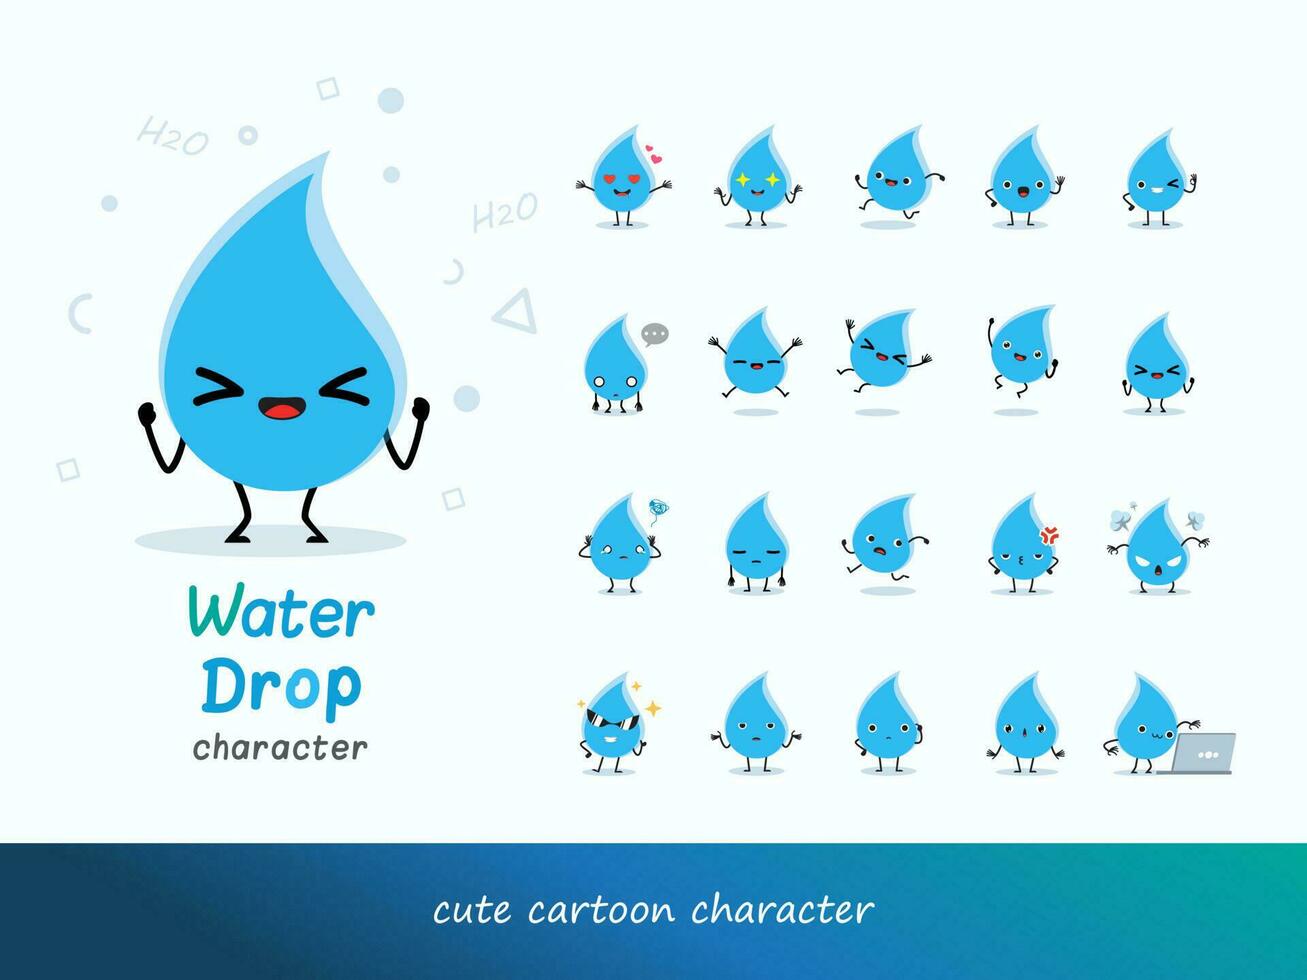 International water day, water drop character set cartoon images water drop illustration vector